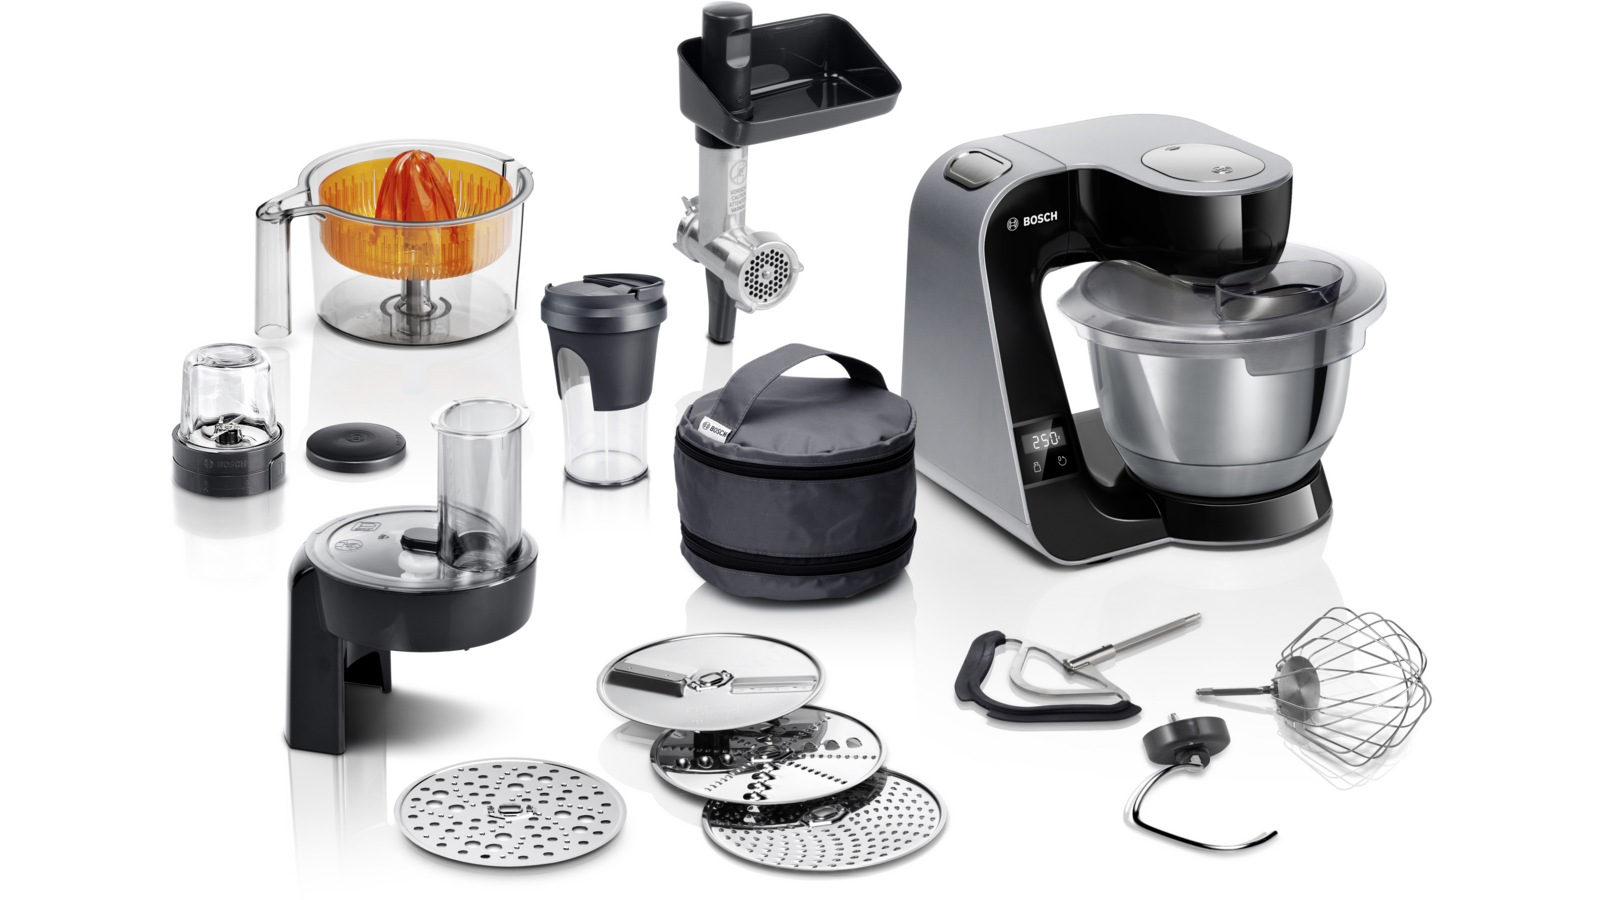 Bosch CreationLine kitchen machine review - Review